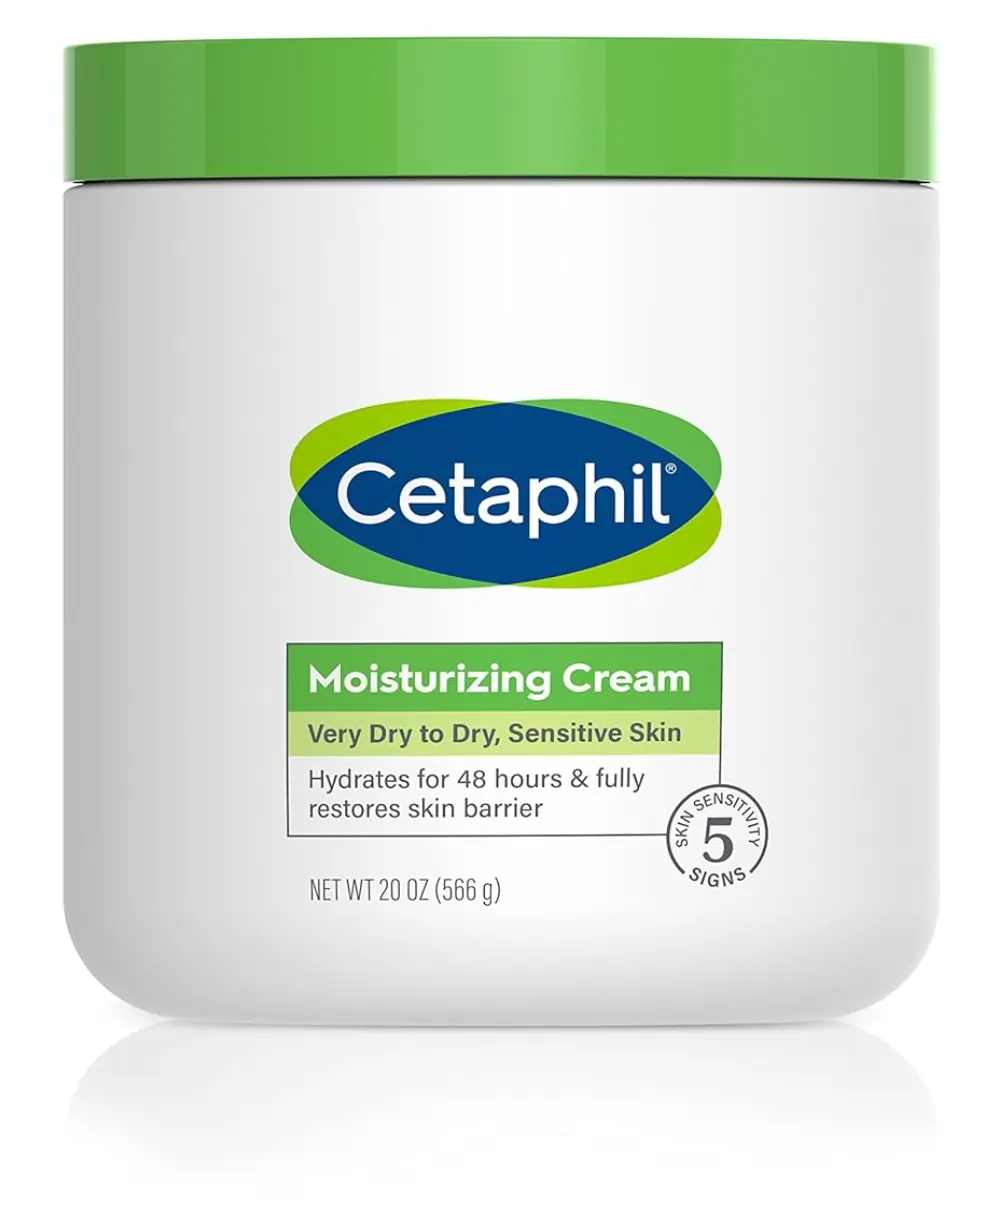 A close second in the Cetaphil vs Aquaphor comparison, the Moisturizing Cream by Cetaphil